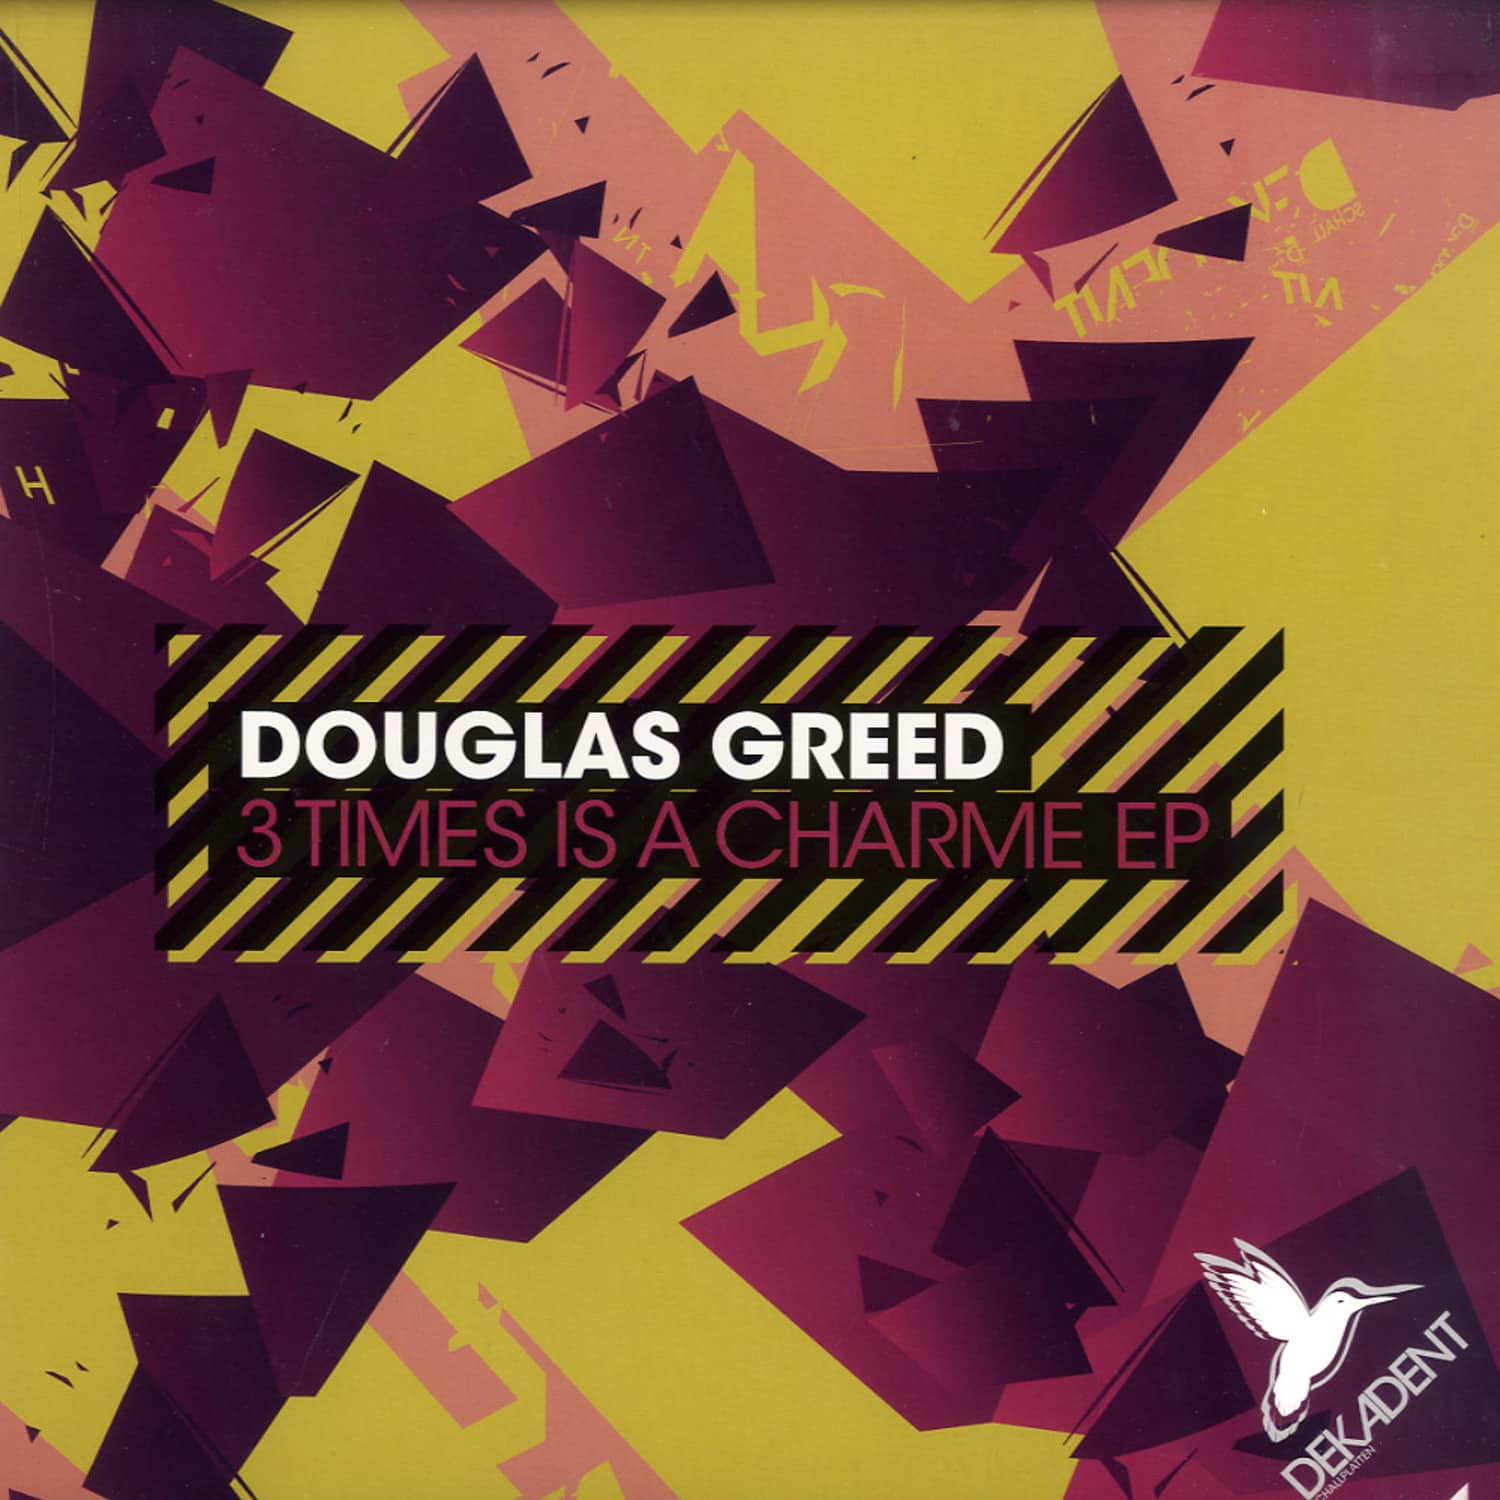 Douglas Greed - 3 TIMES IS A CHARME EP